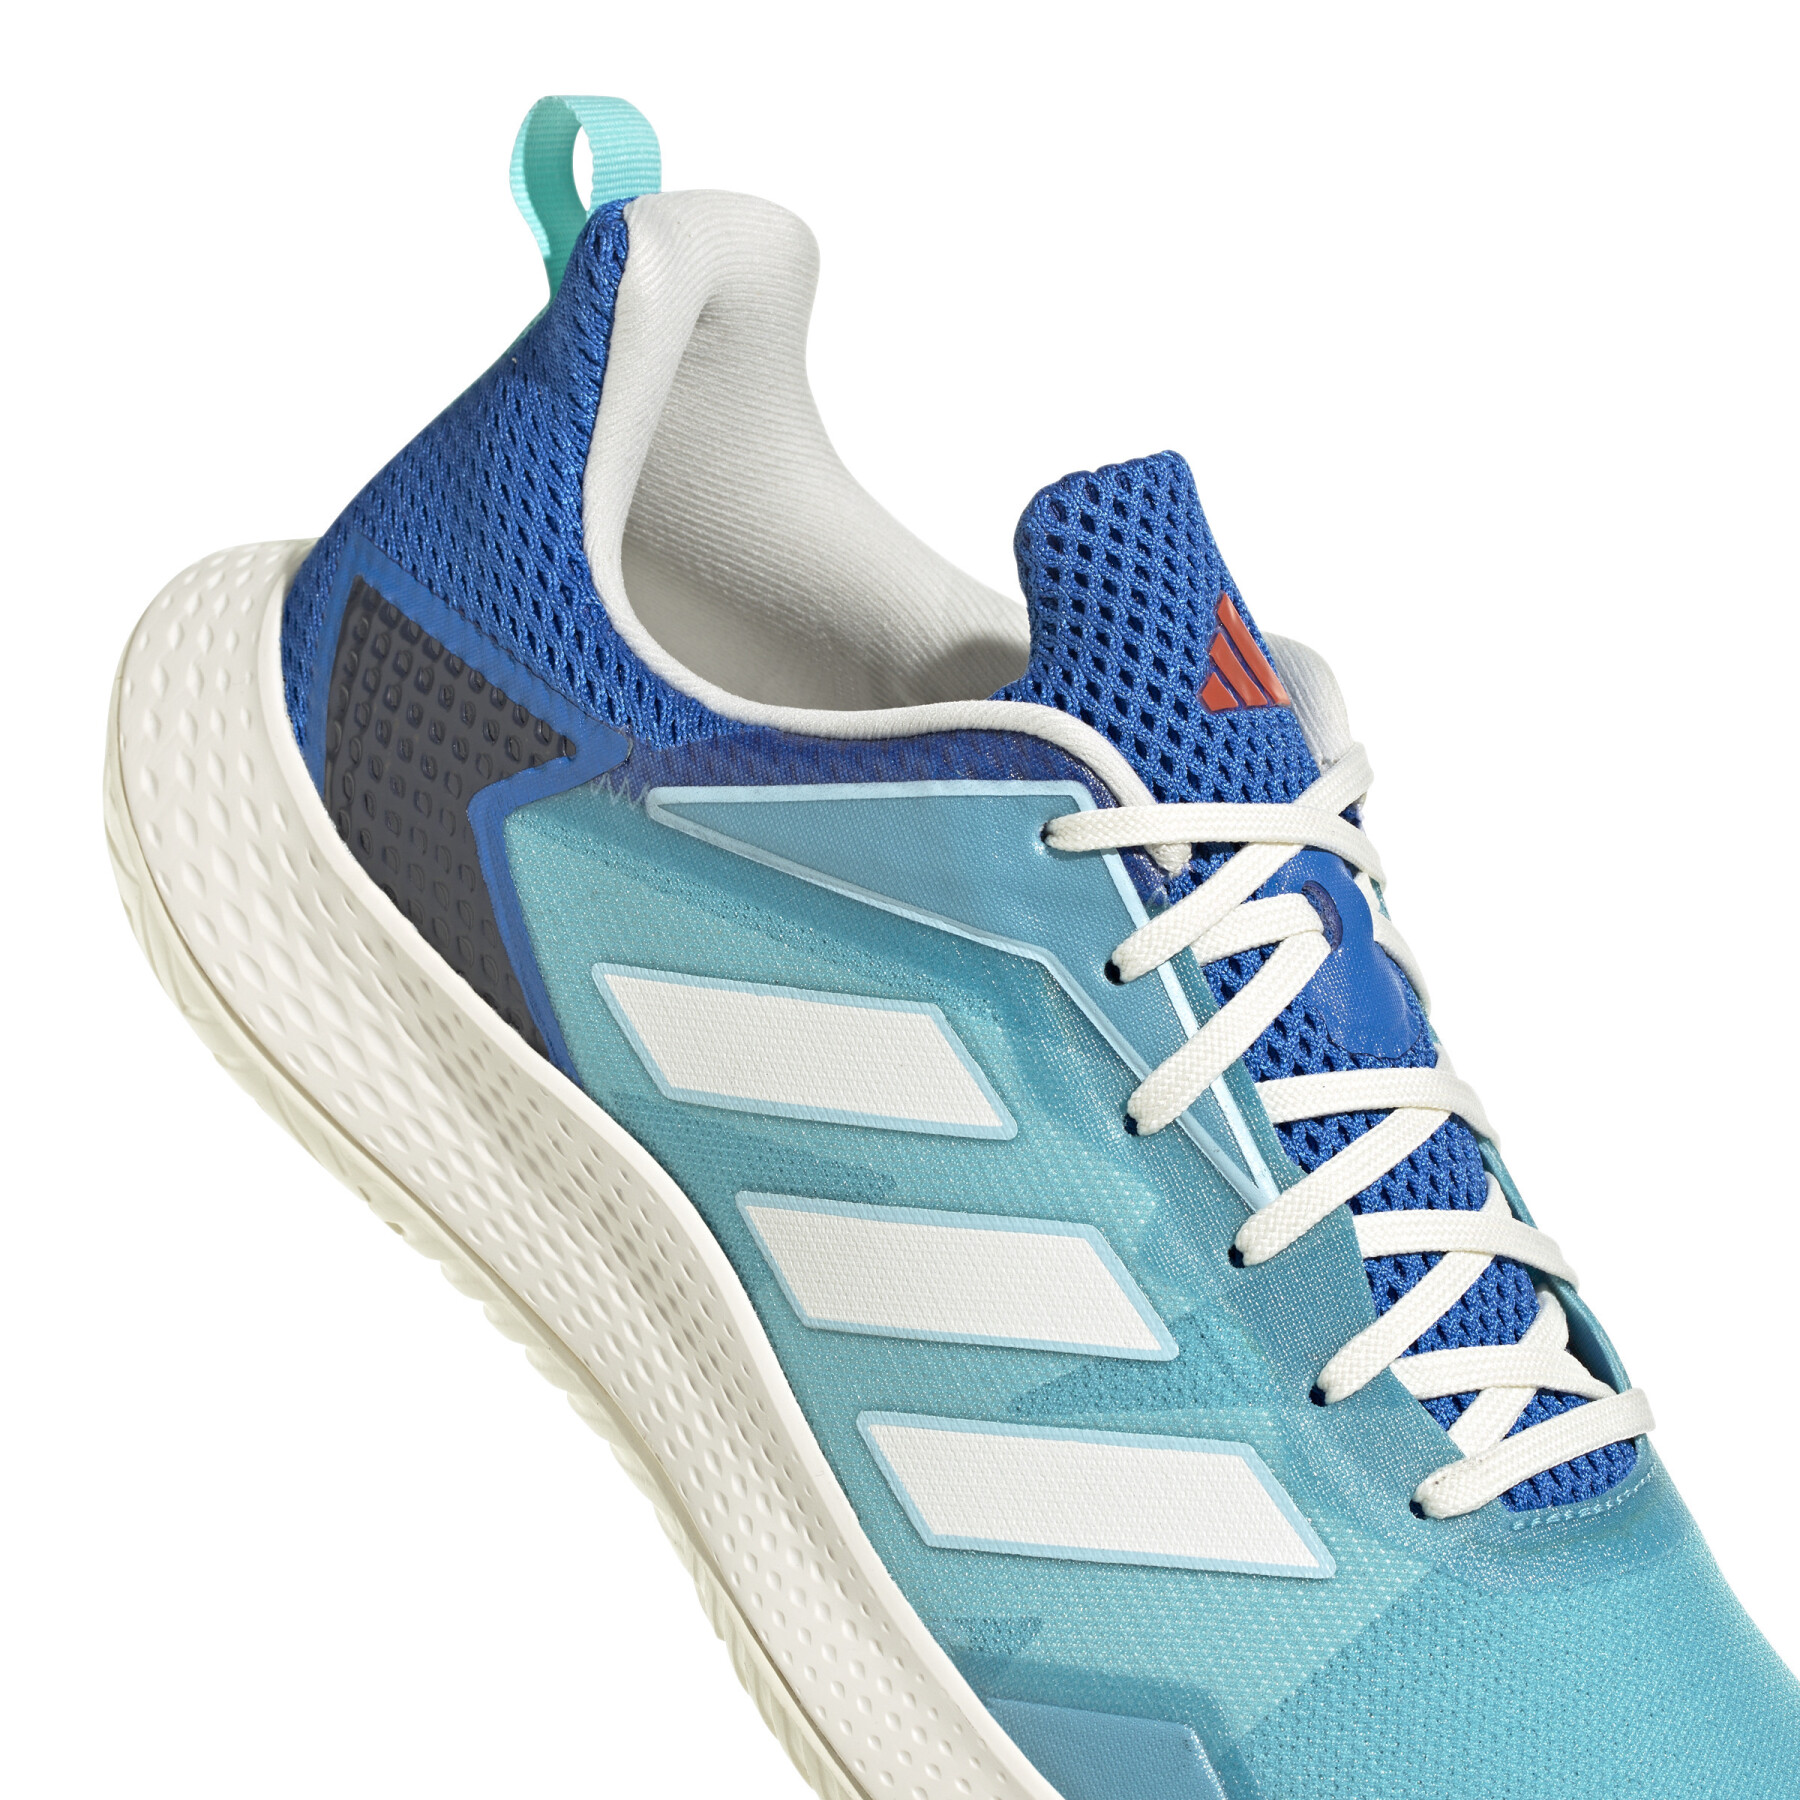 Chaussures de tennis adidas Defiant Speed